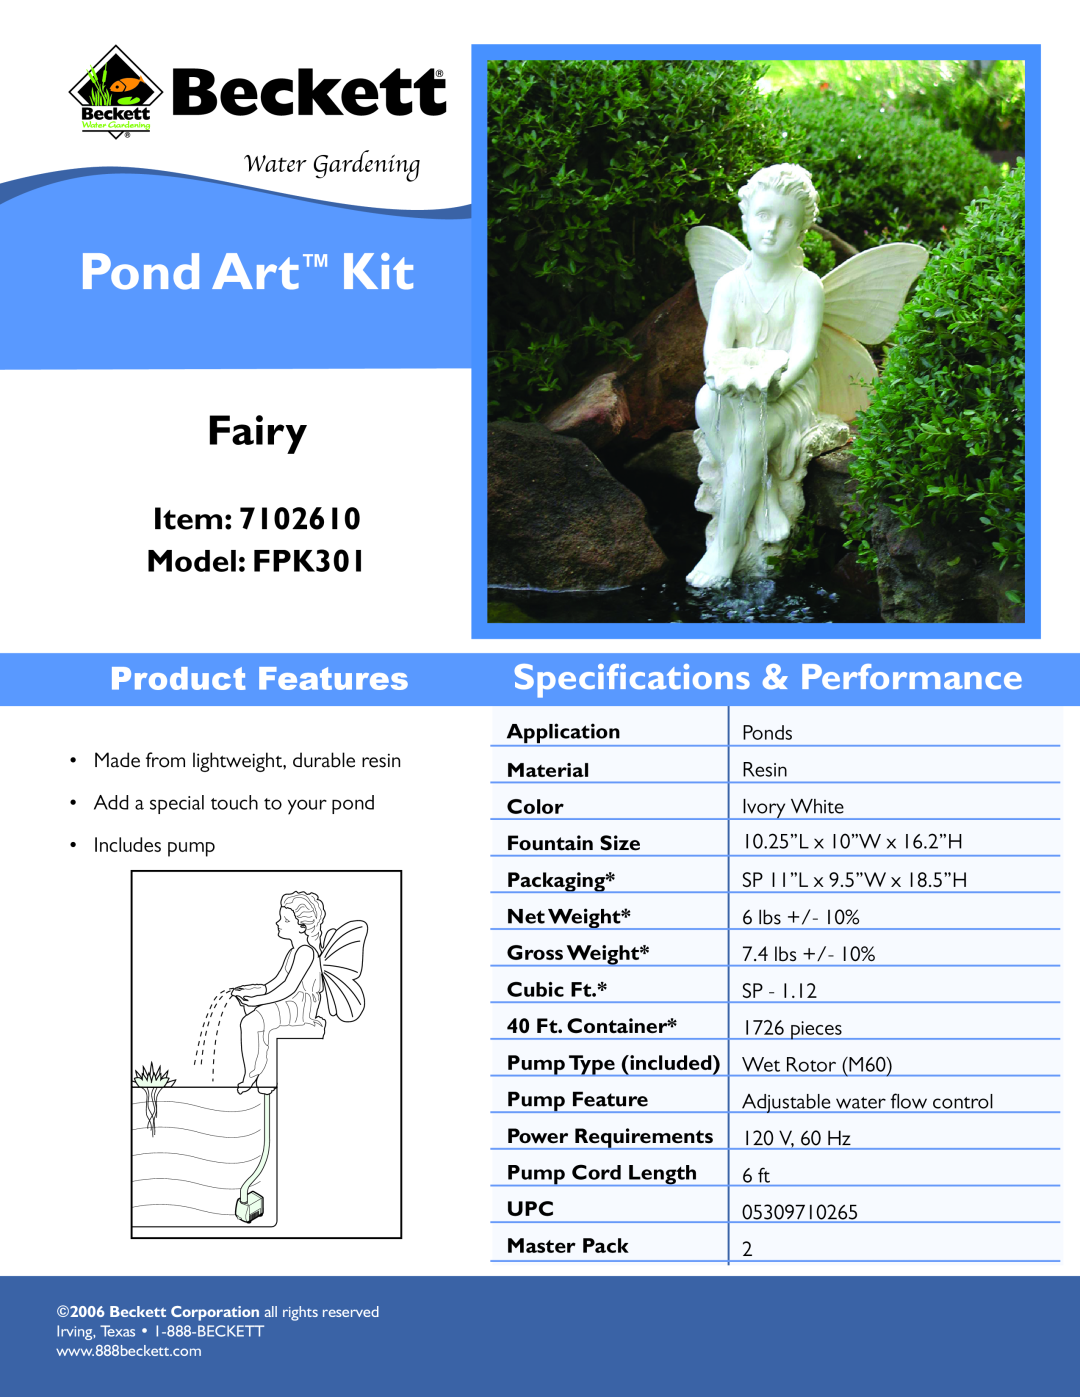 Beckett Water Gardening specifications Pond Art Kit, Fairy, Speciﬁcations & Performance, Item Model FPK301 